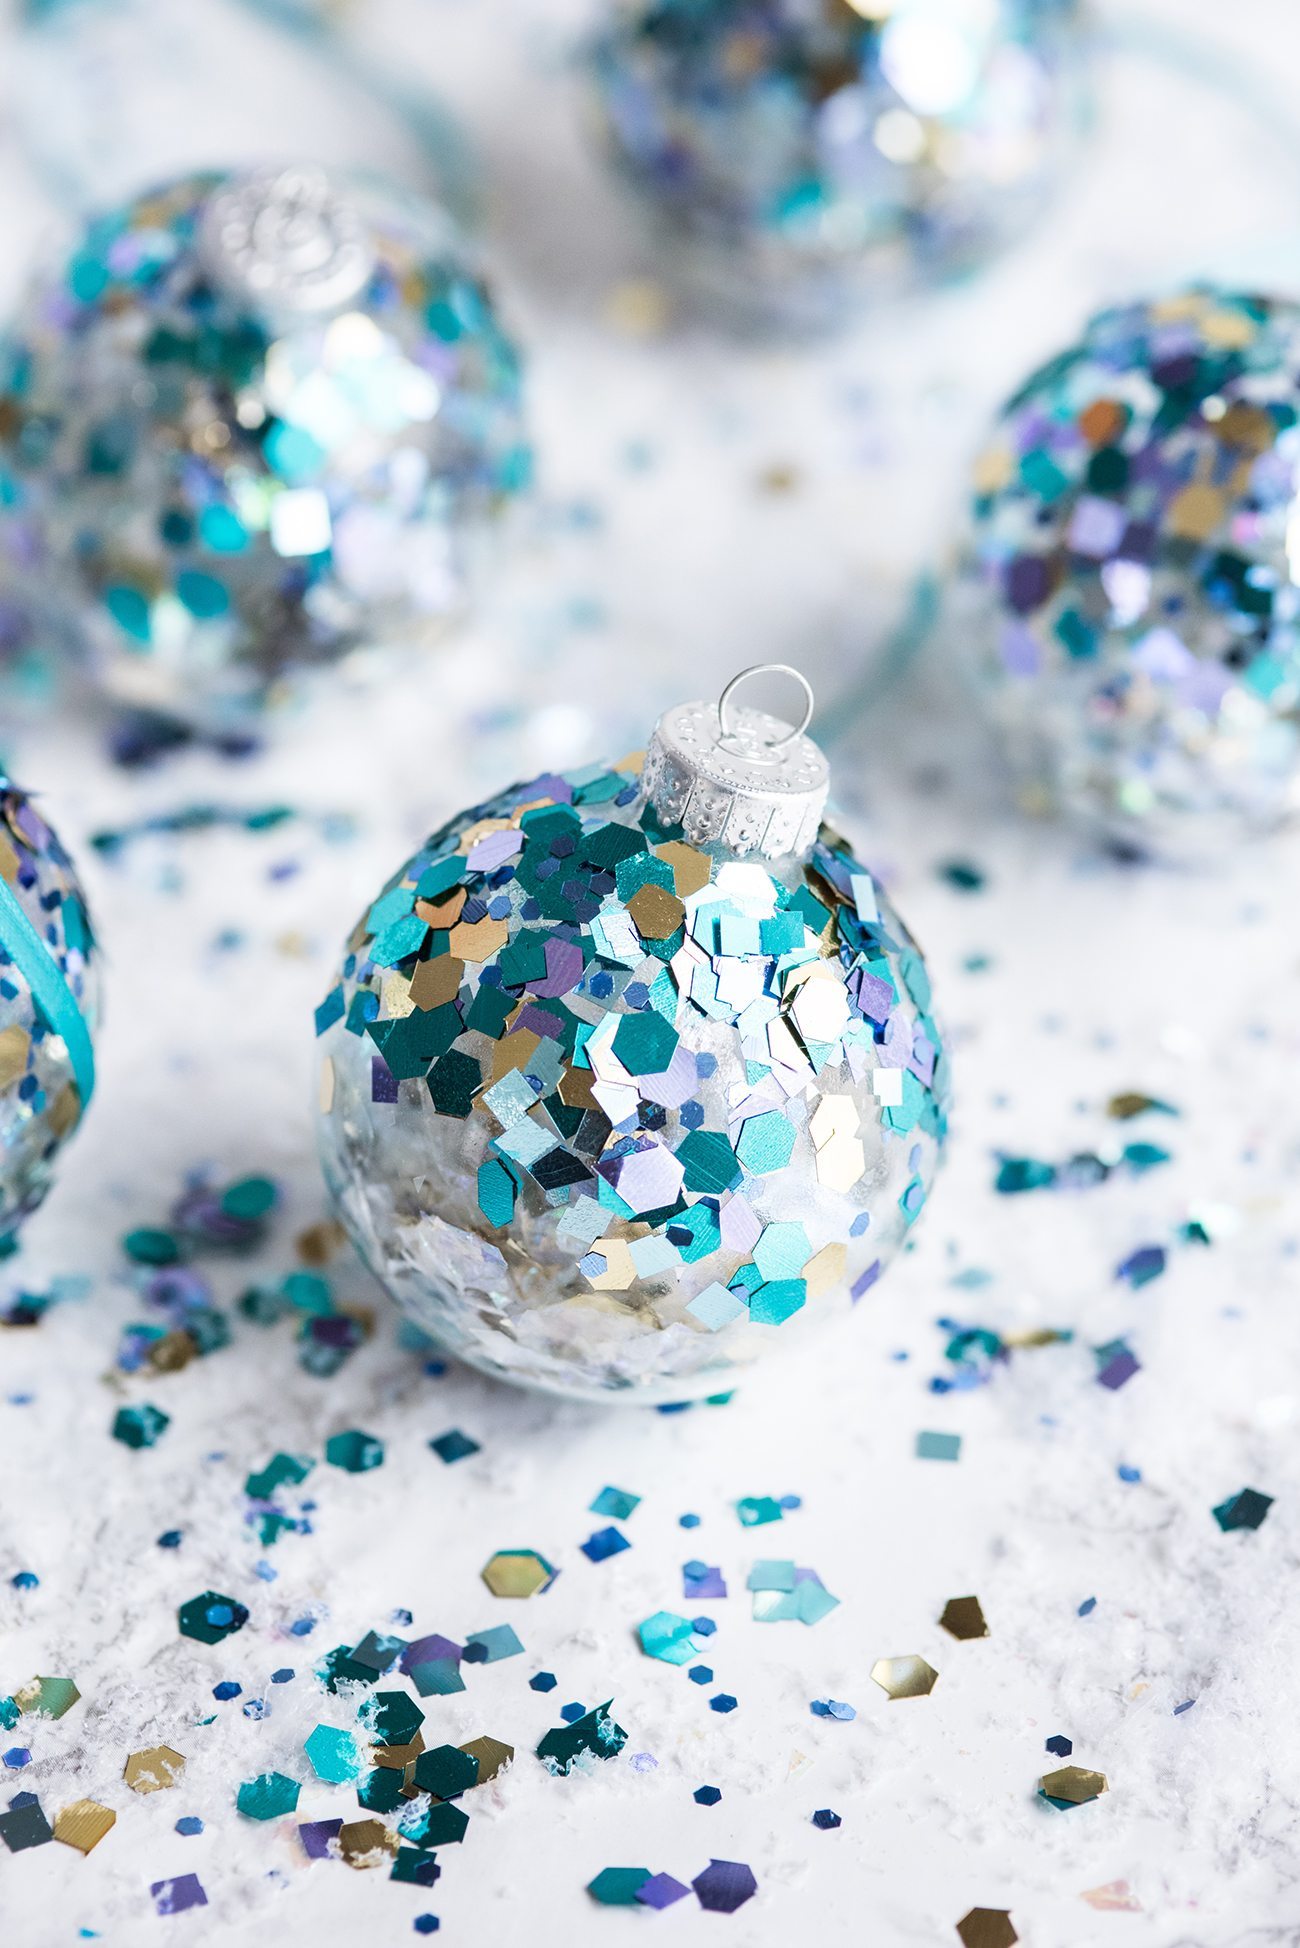 DIY Glitter Confetti Ornaments | Easy glass ornament craft ideas from @cydconverse